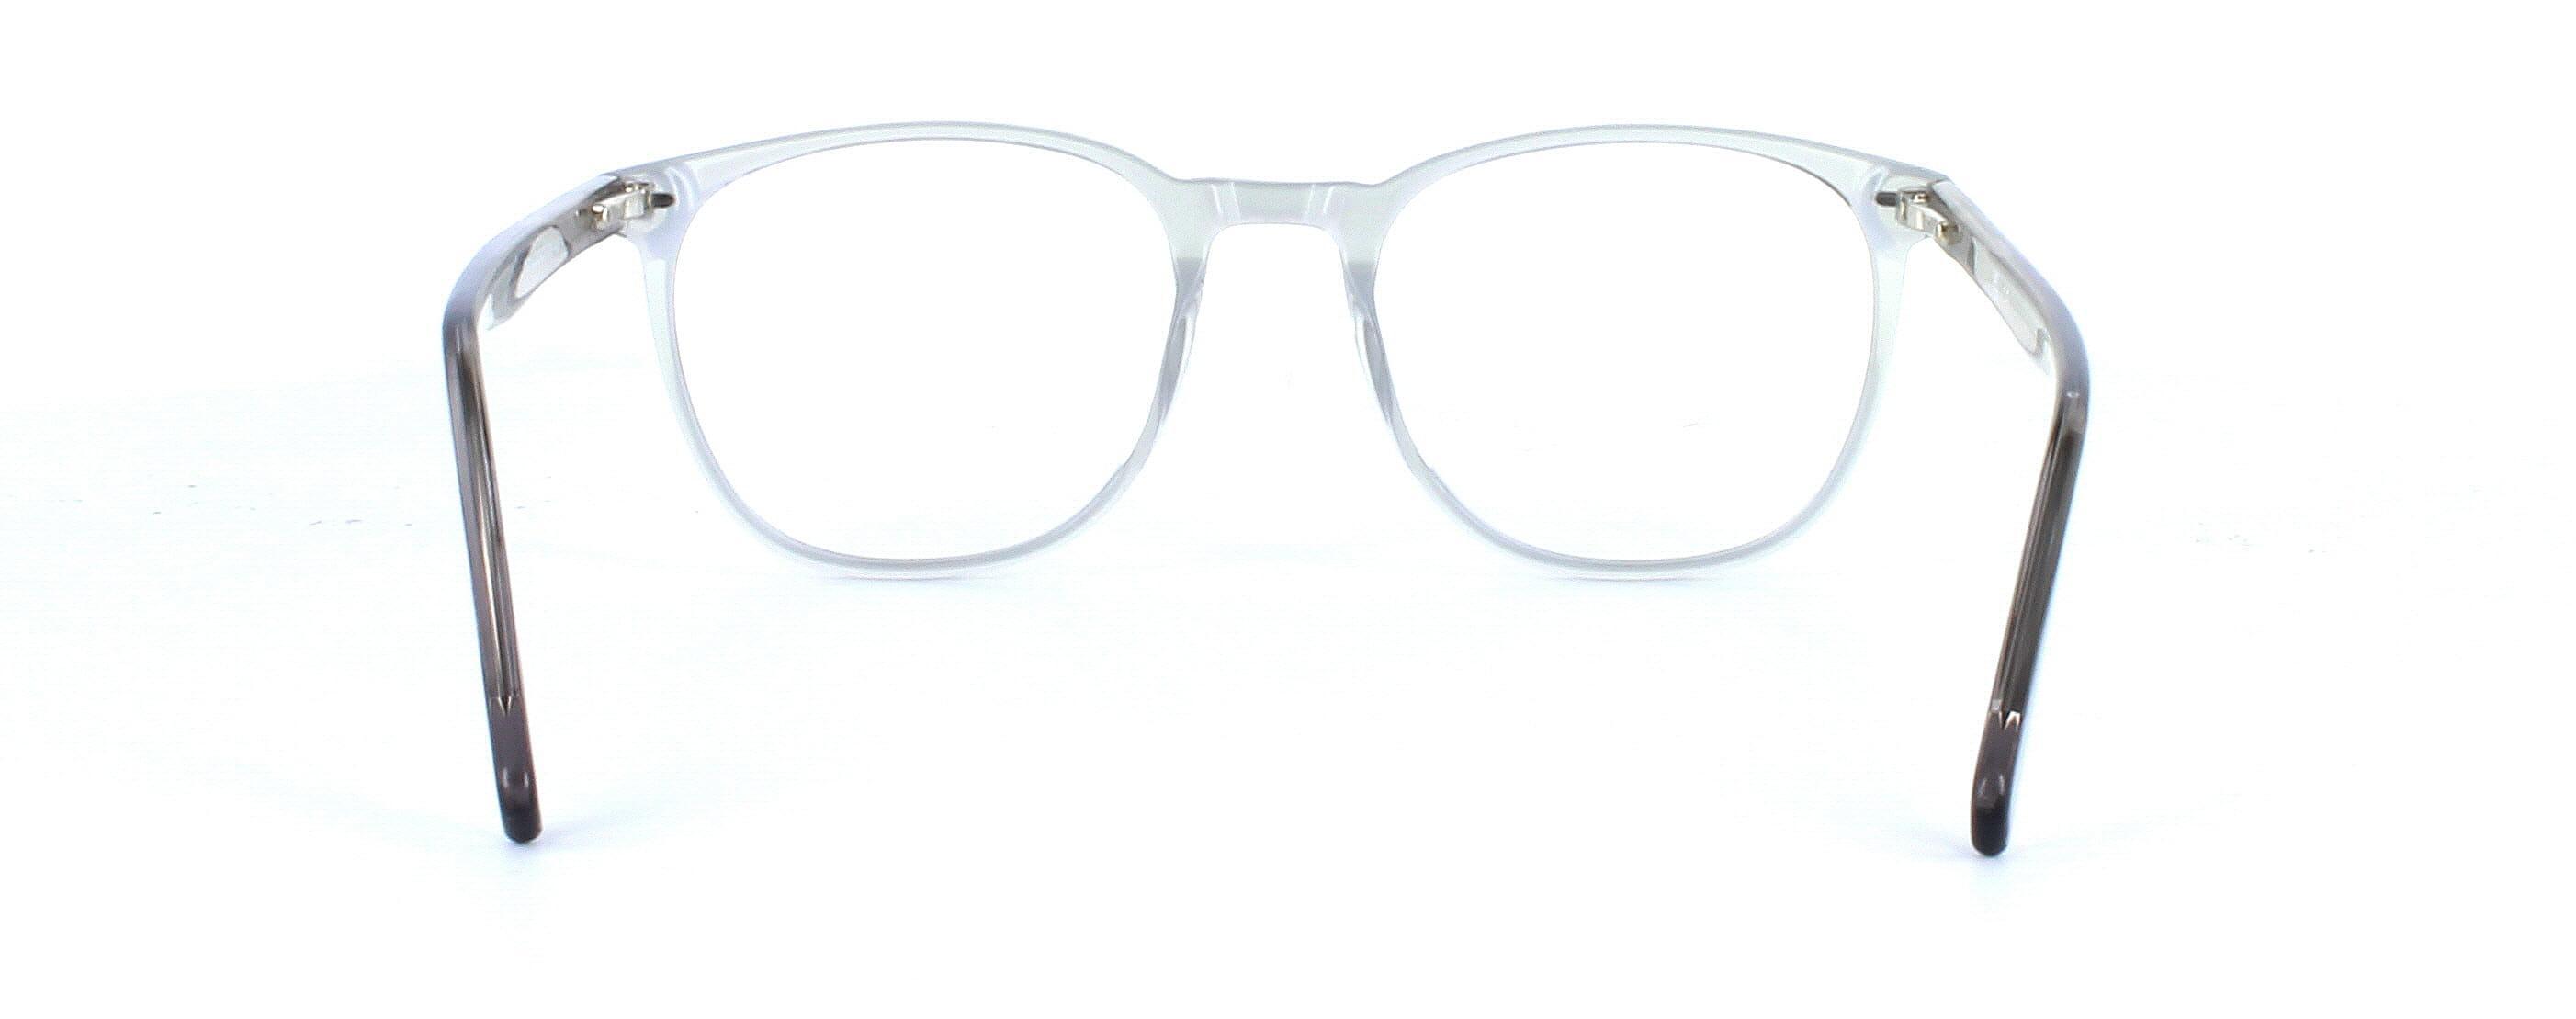 Hercules - Unisex plastic glasses frame - Crystal grey - image view 3